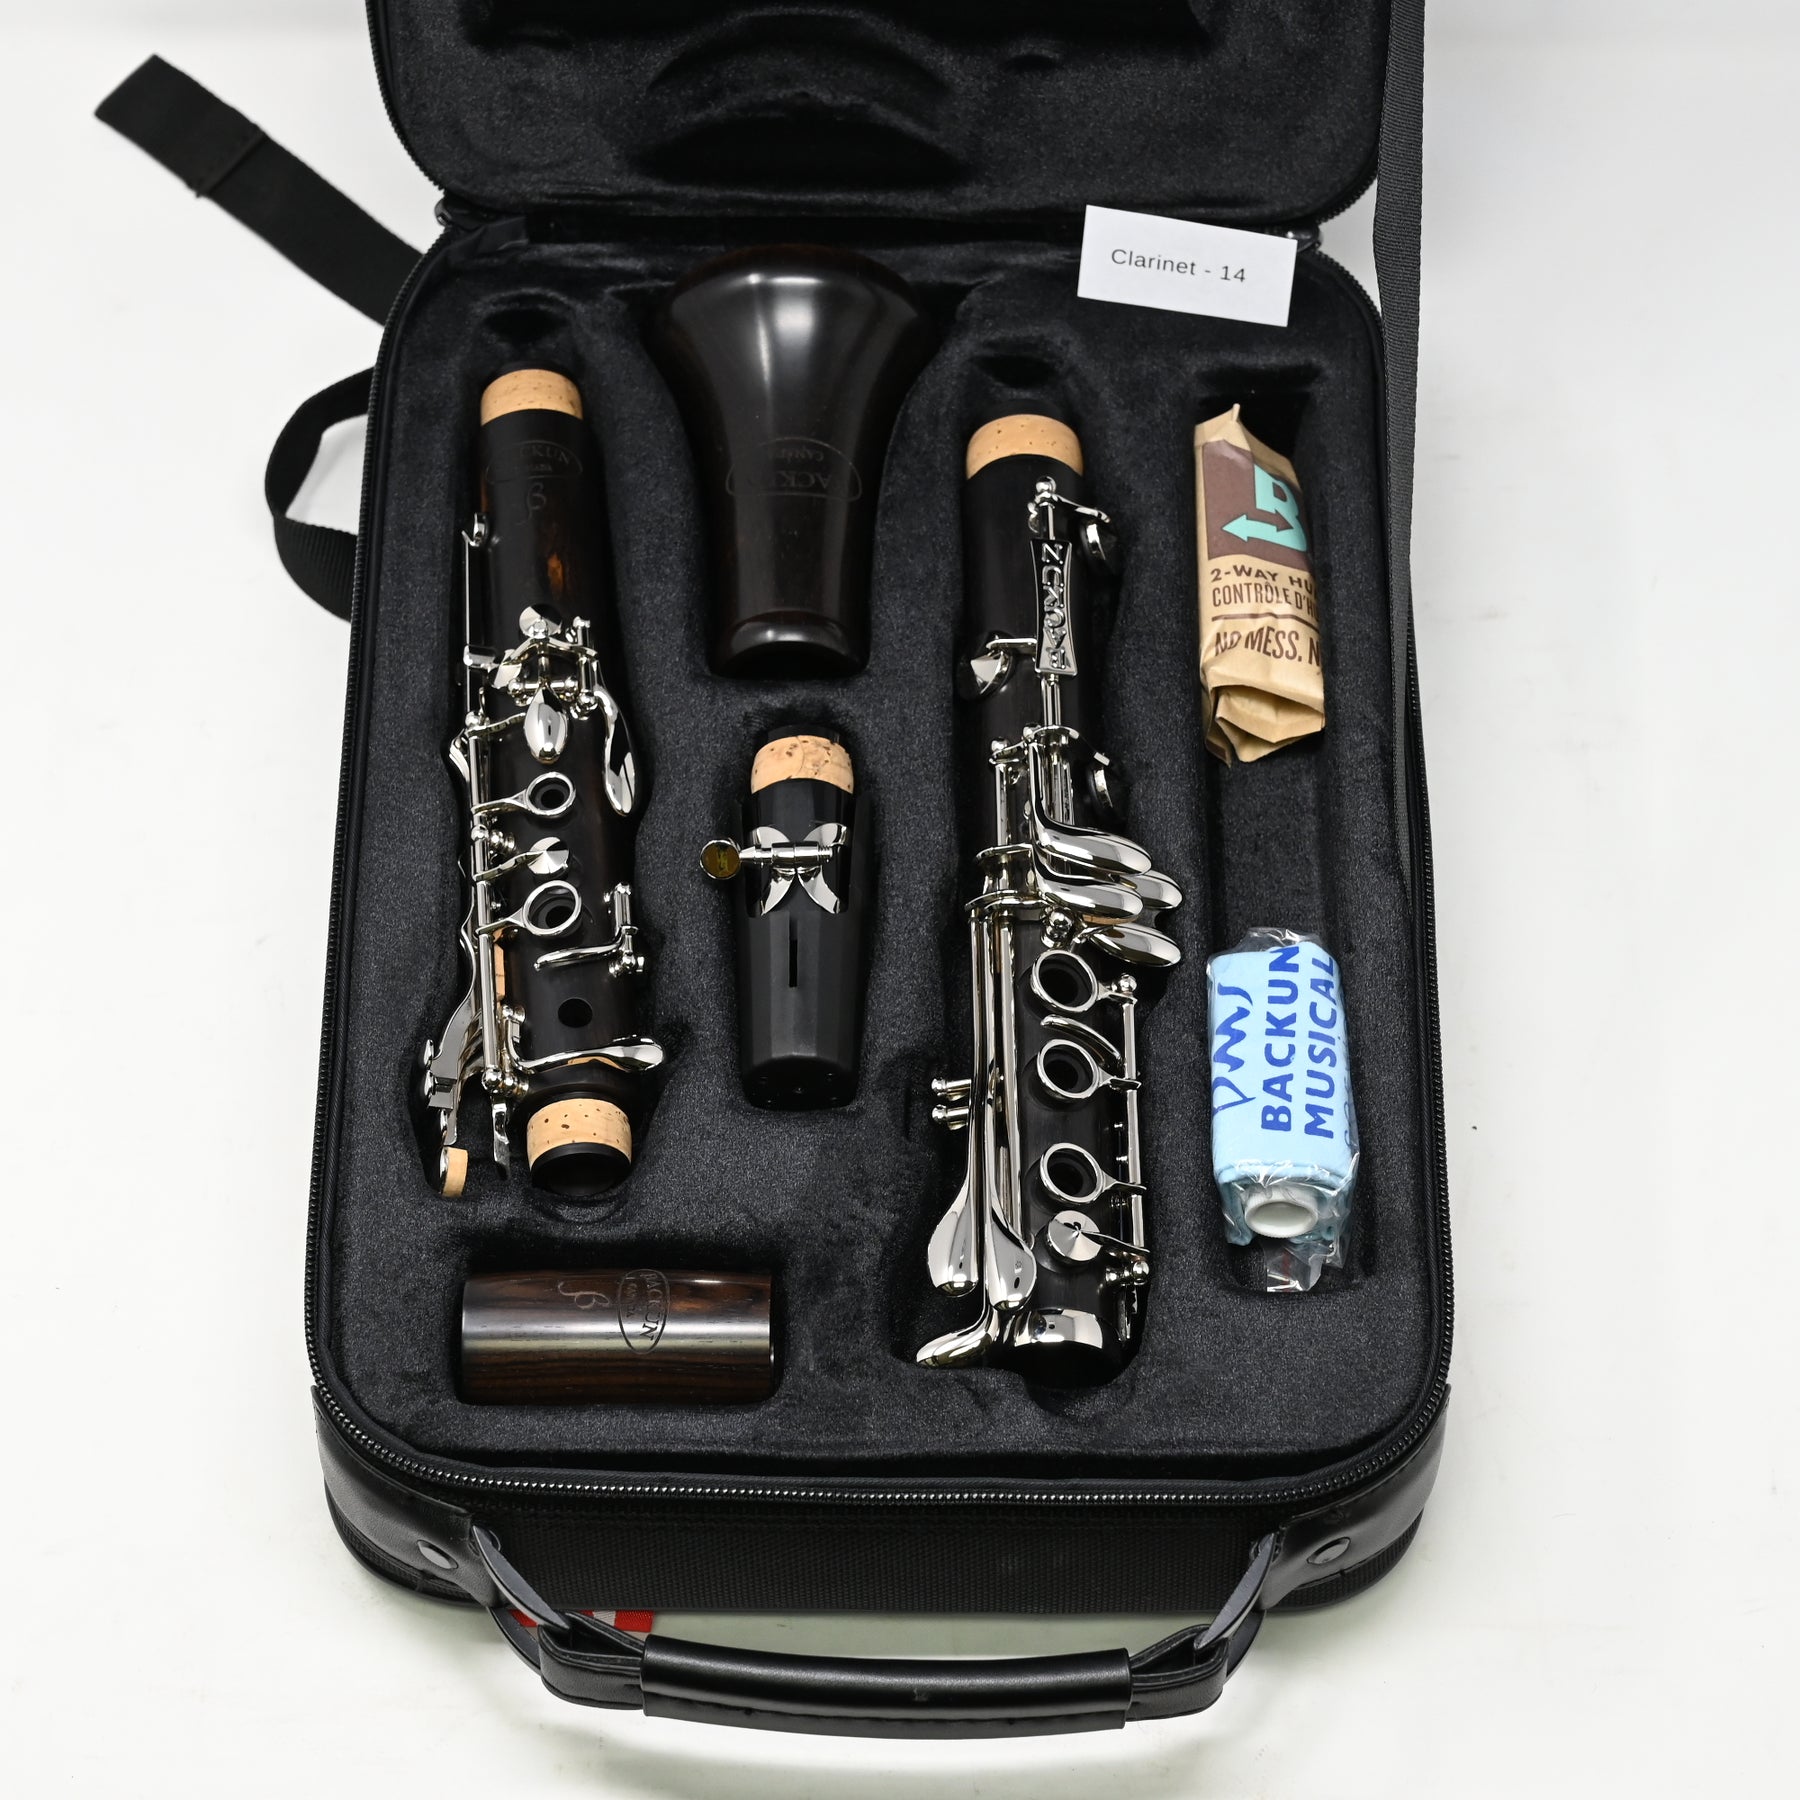 Pre-Owned Beta Bb Clarinet, Grenadilla with Nickel Keys (CL. 14)